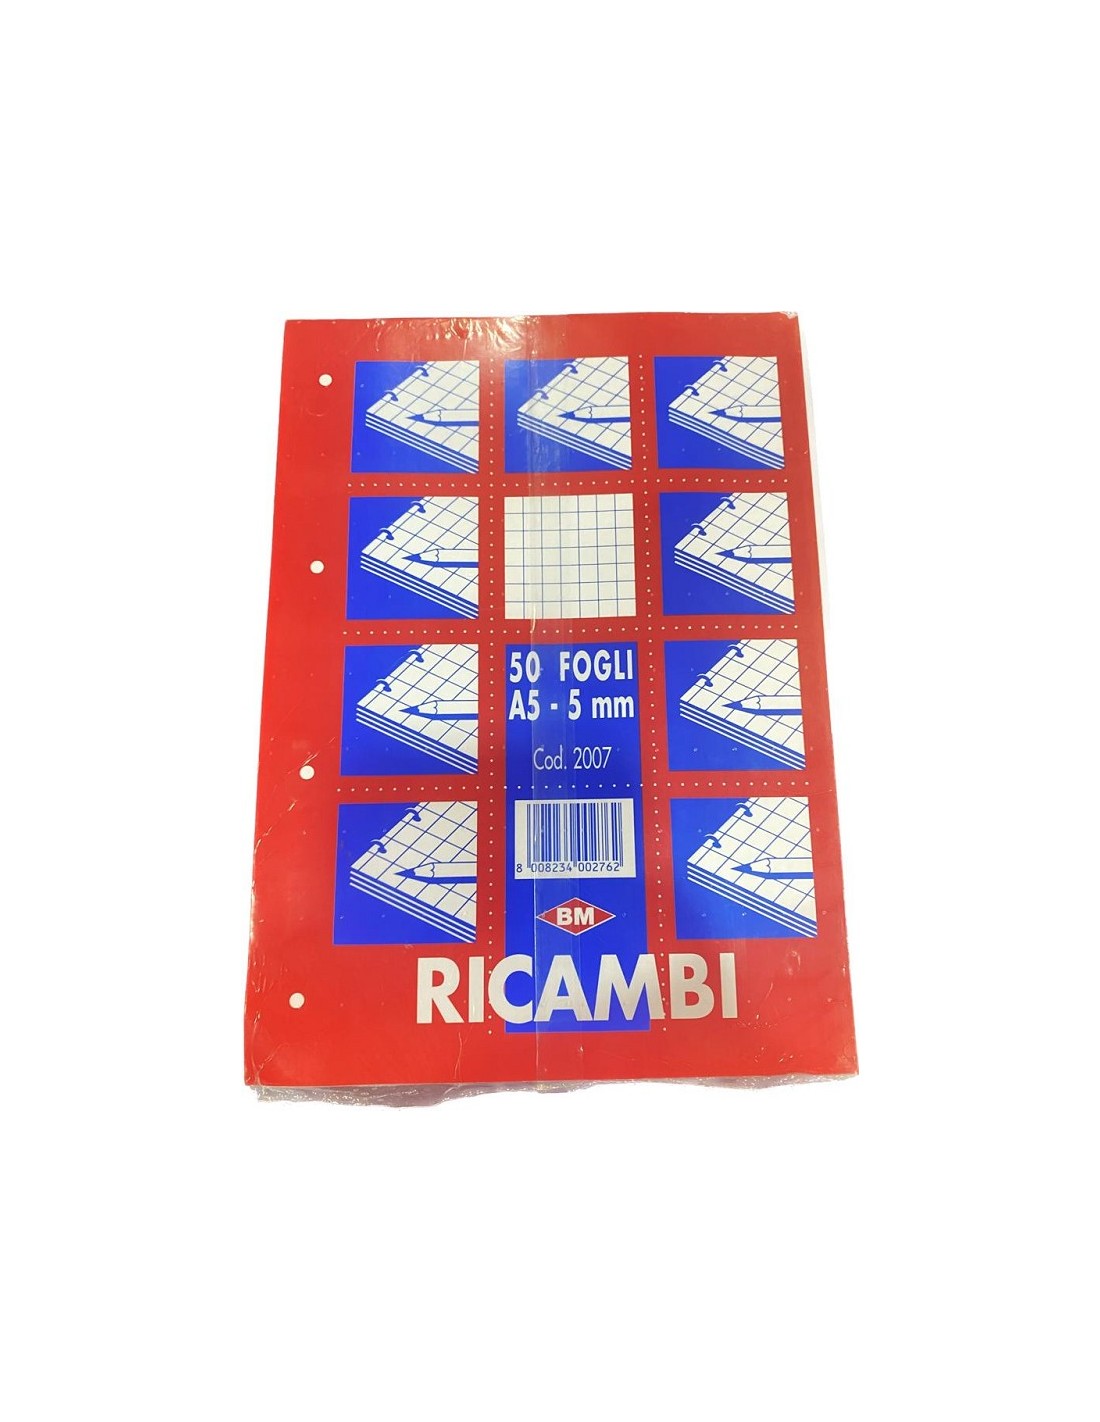 RICAMBI 50 FOGLI A5 5mm